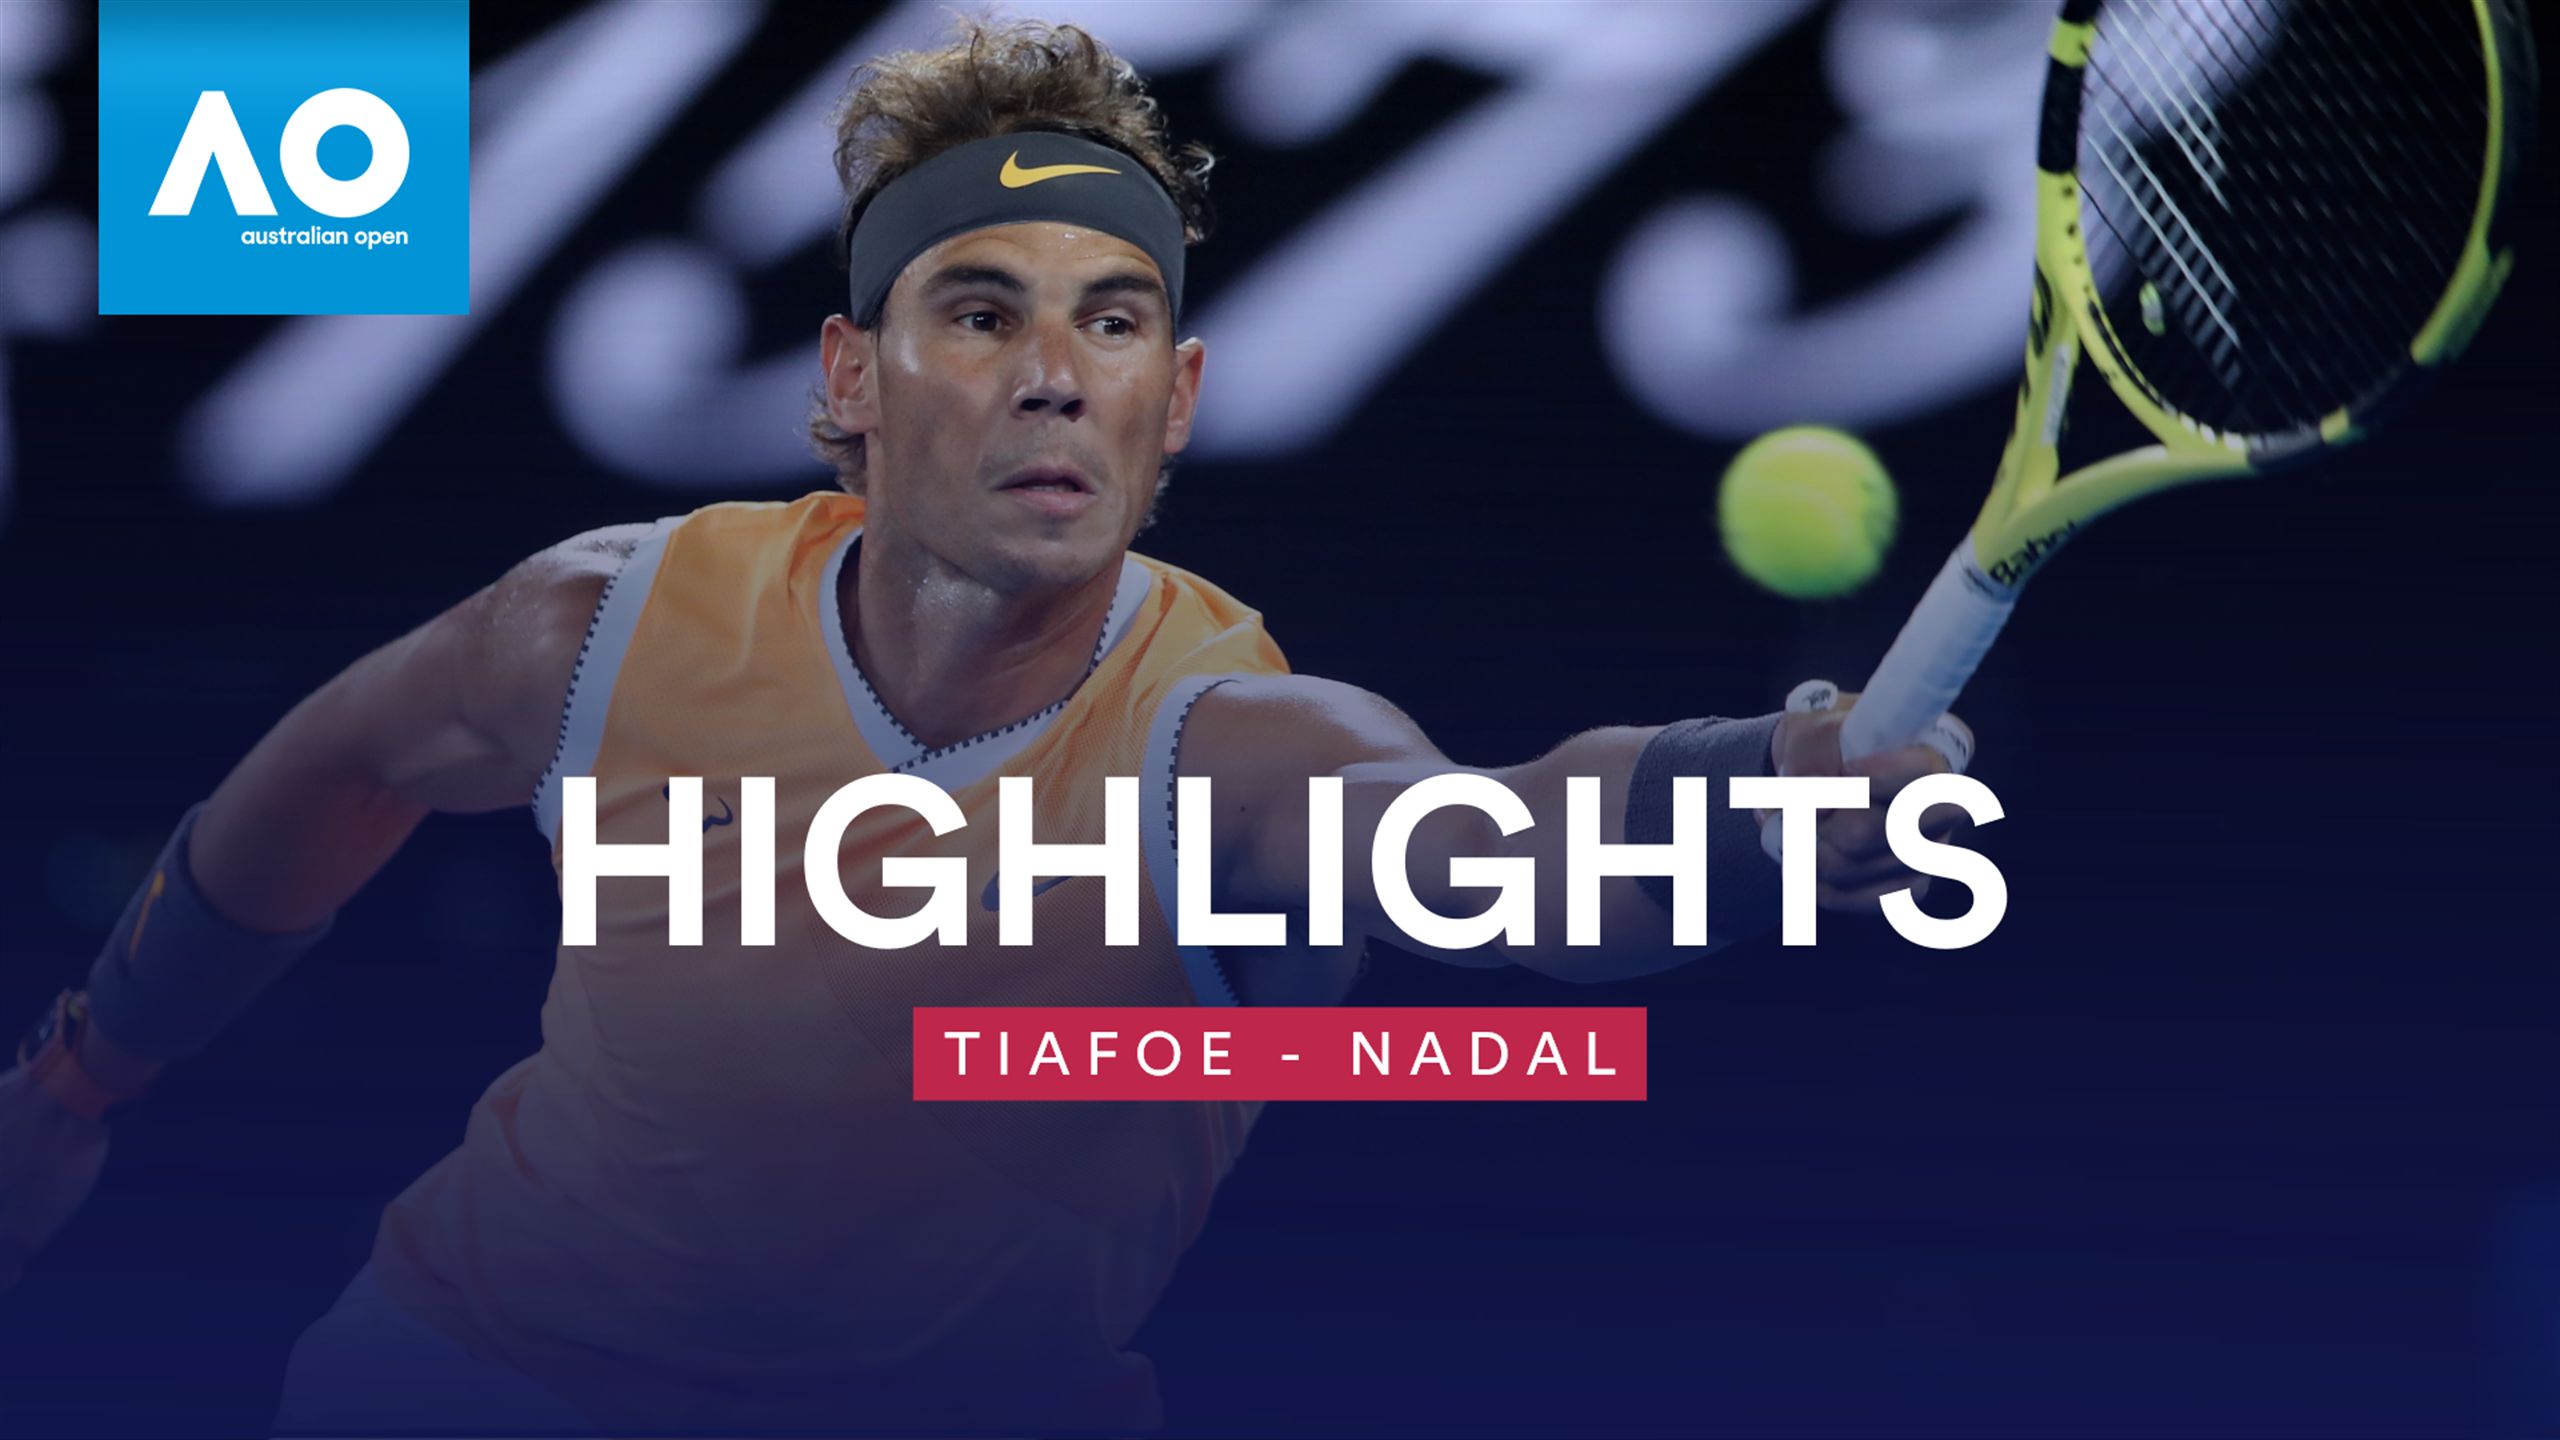 Australian Open 2019 - Highlights Rafael Nadal besiegt Frances Tiafoe - Tennis Video